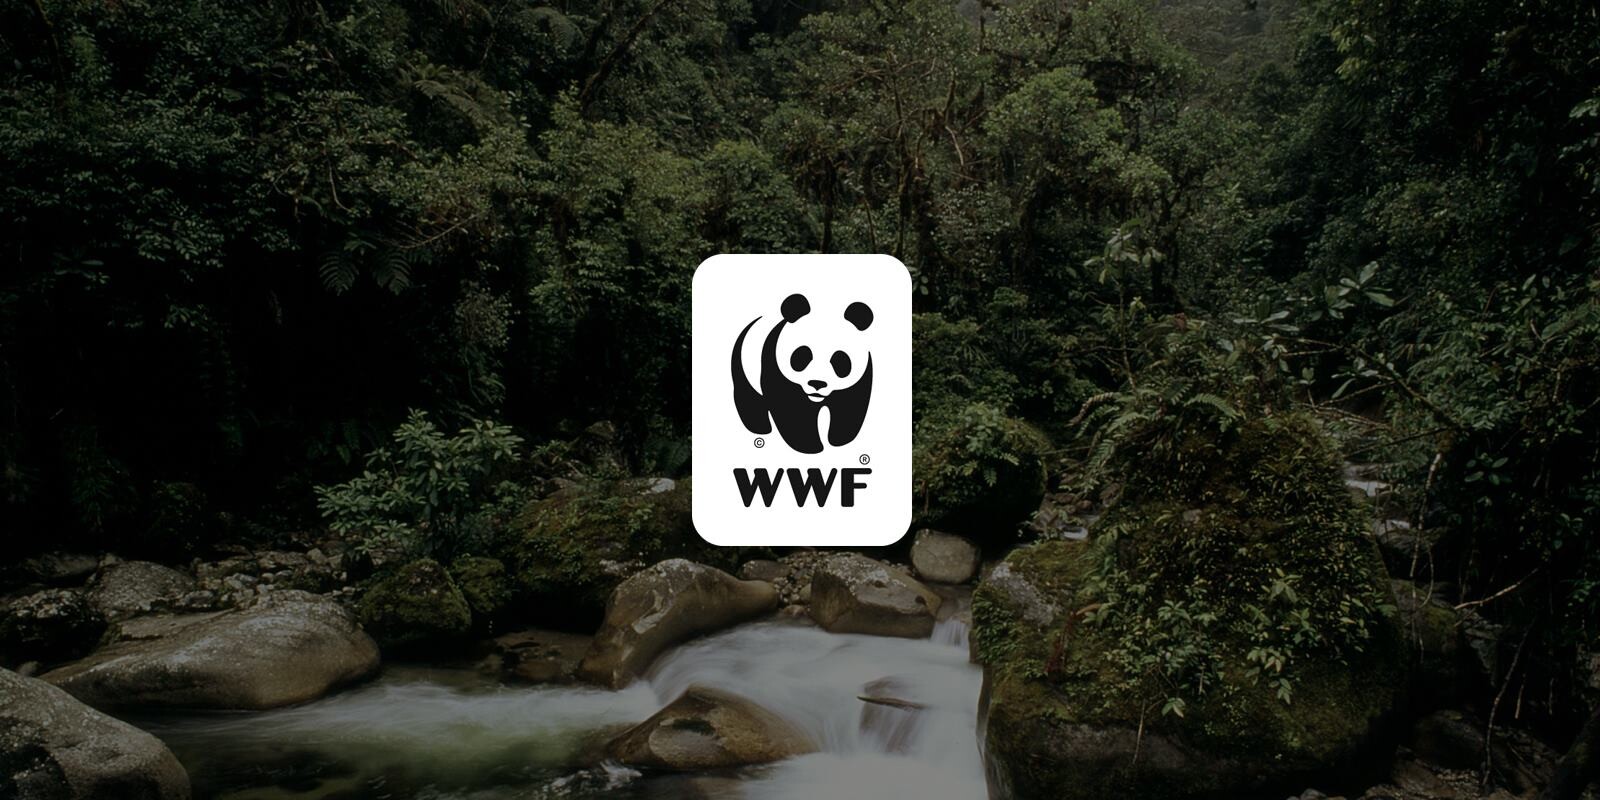 More information about "Τα οικονομικά της πρόληψης και της καταστολής των δασικών πυρκαγιών για πρώτη φορά σε μια αναλυτική έκθεση από το WWF"